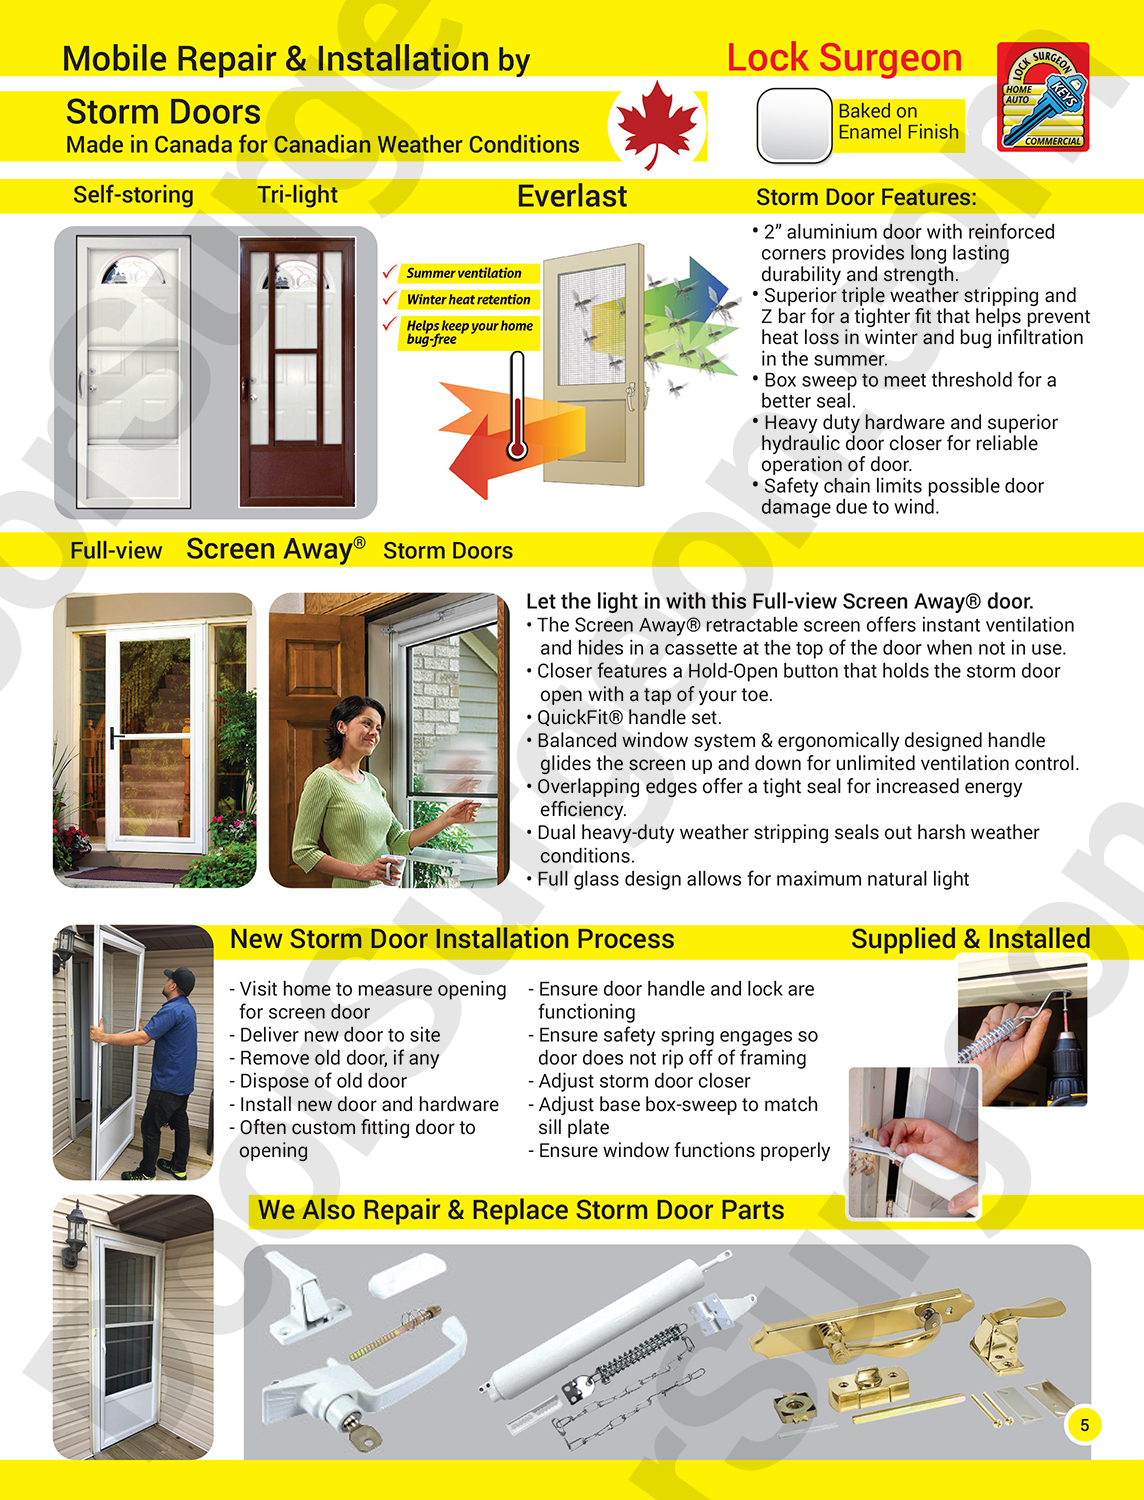 Residential storm door repair, adjustments, security, sales & installations.